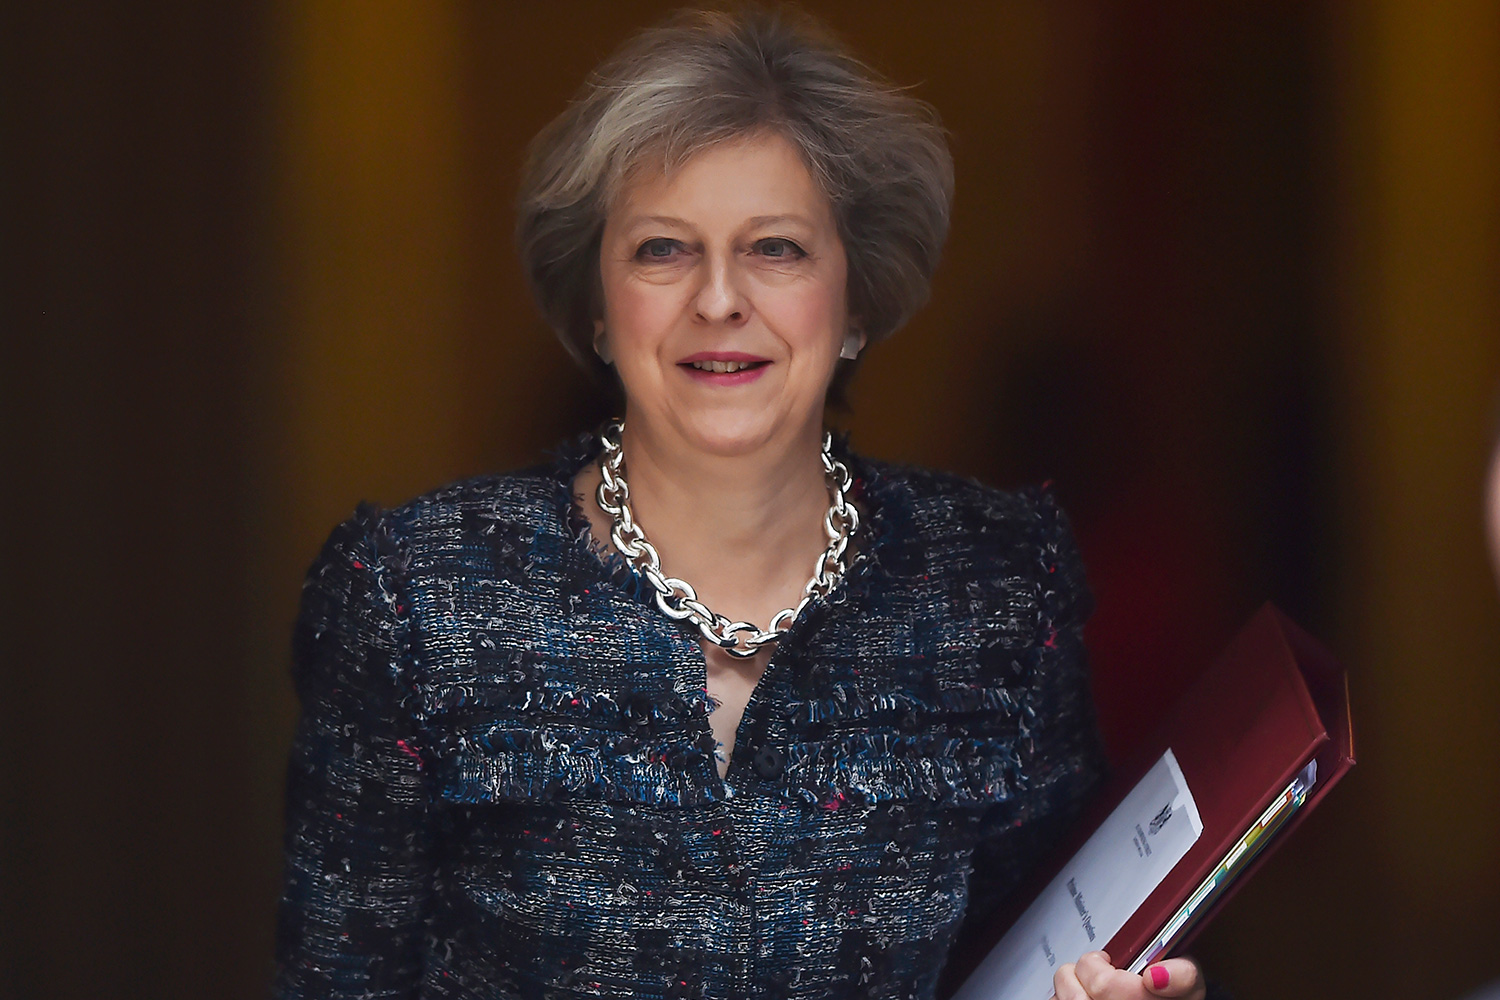 Theresa May, acusada de encubrir escándalos de abuso infantil